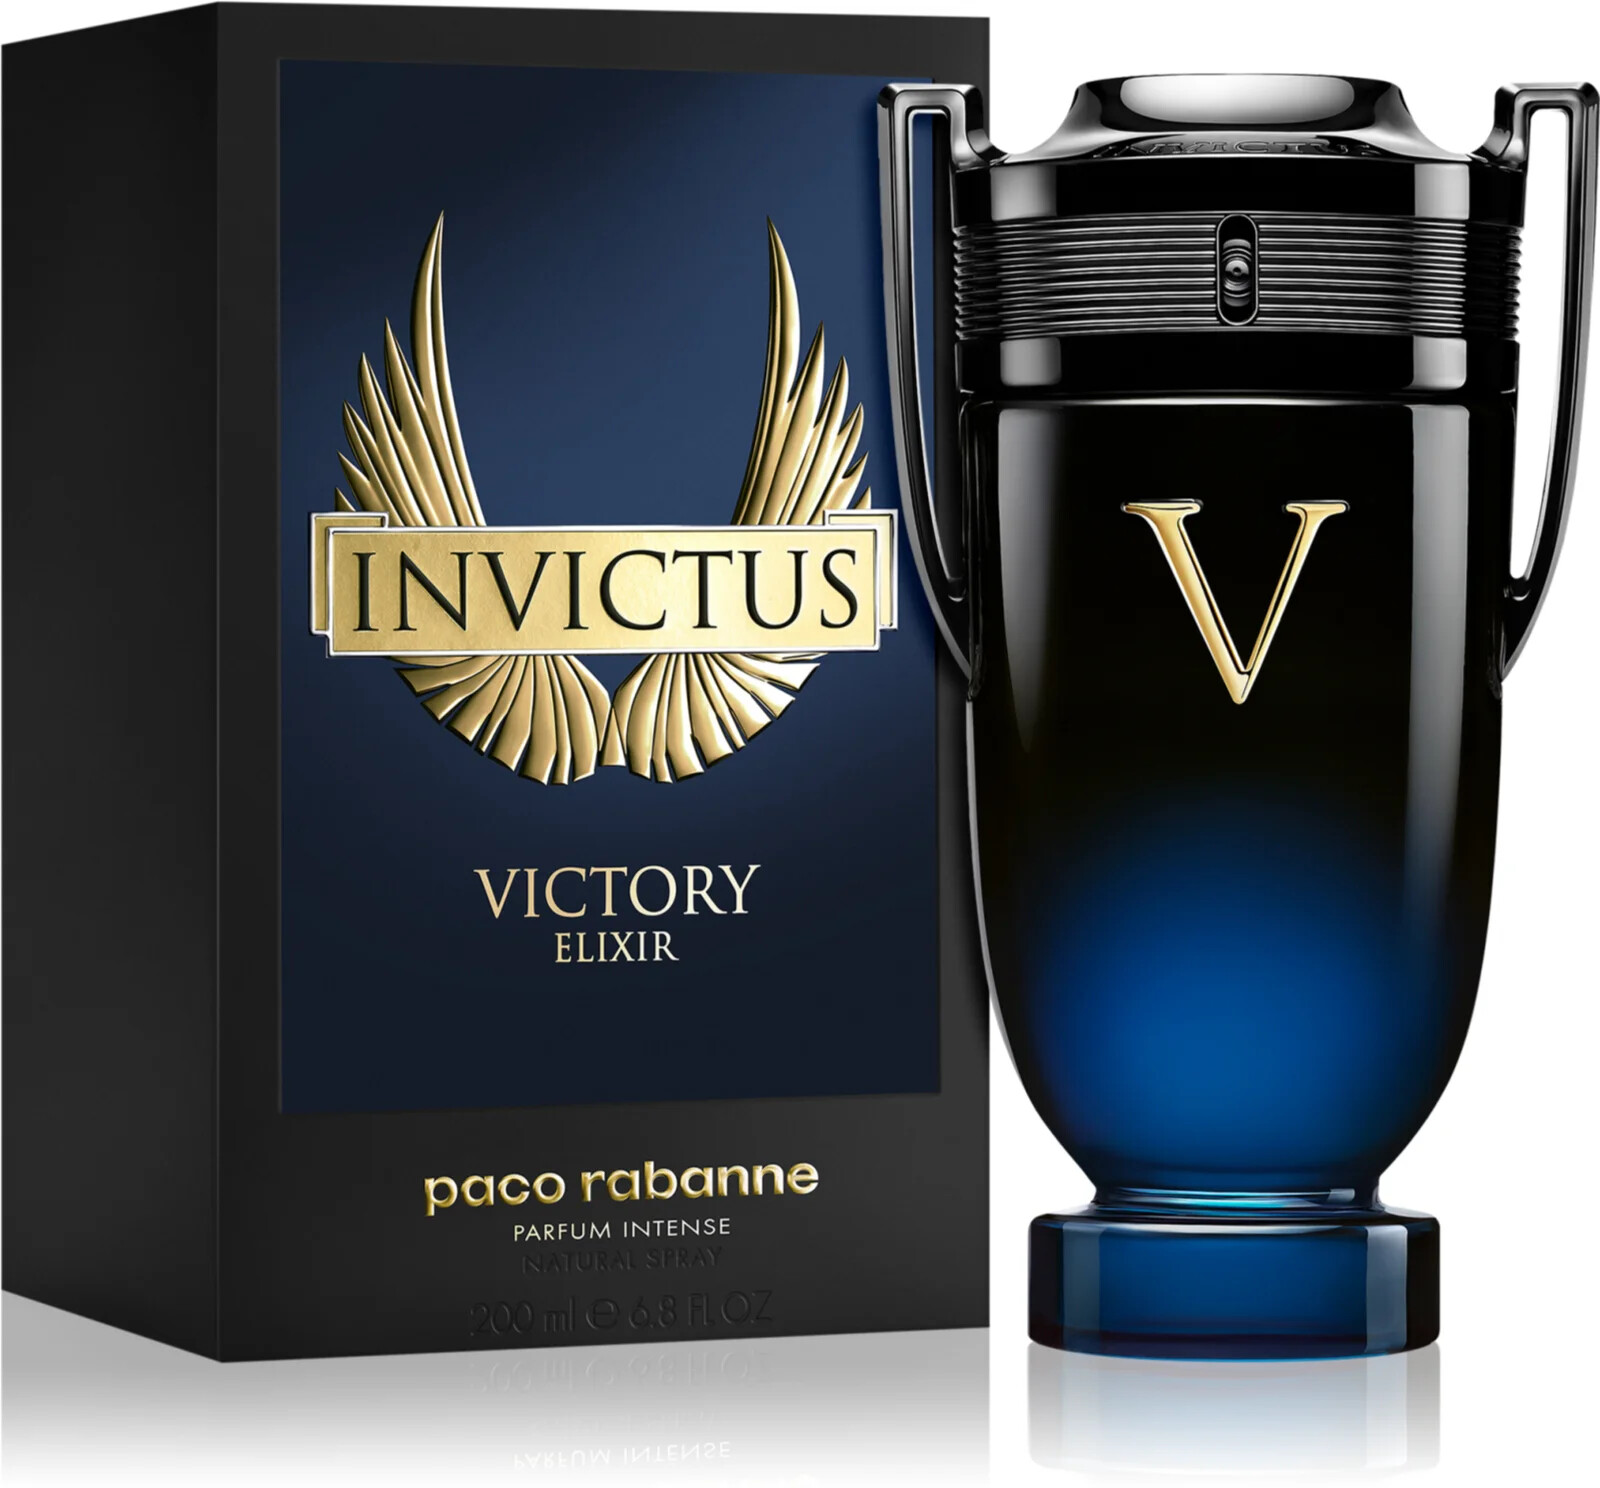 Paco Rabanne Invictus Victory Elixir parfém pro muže 200 ml